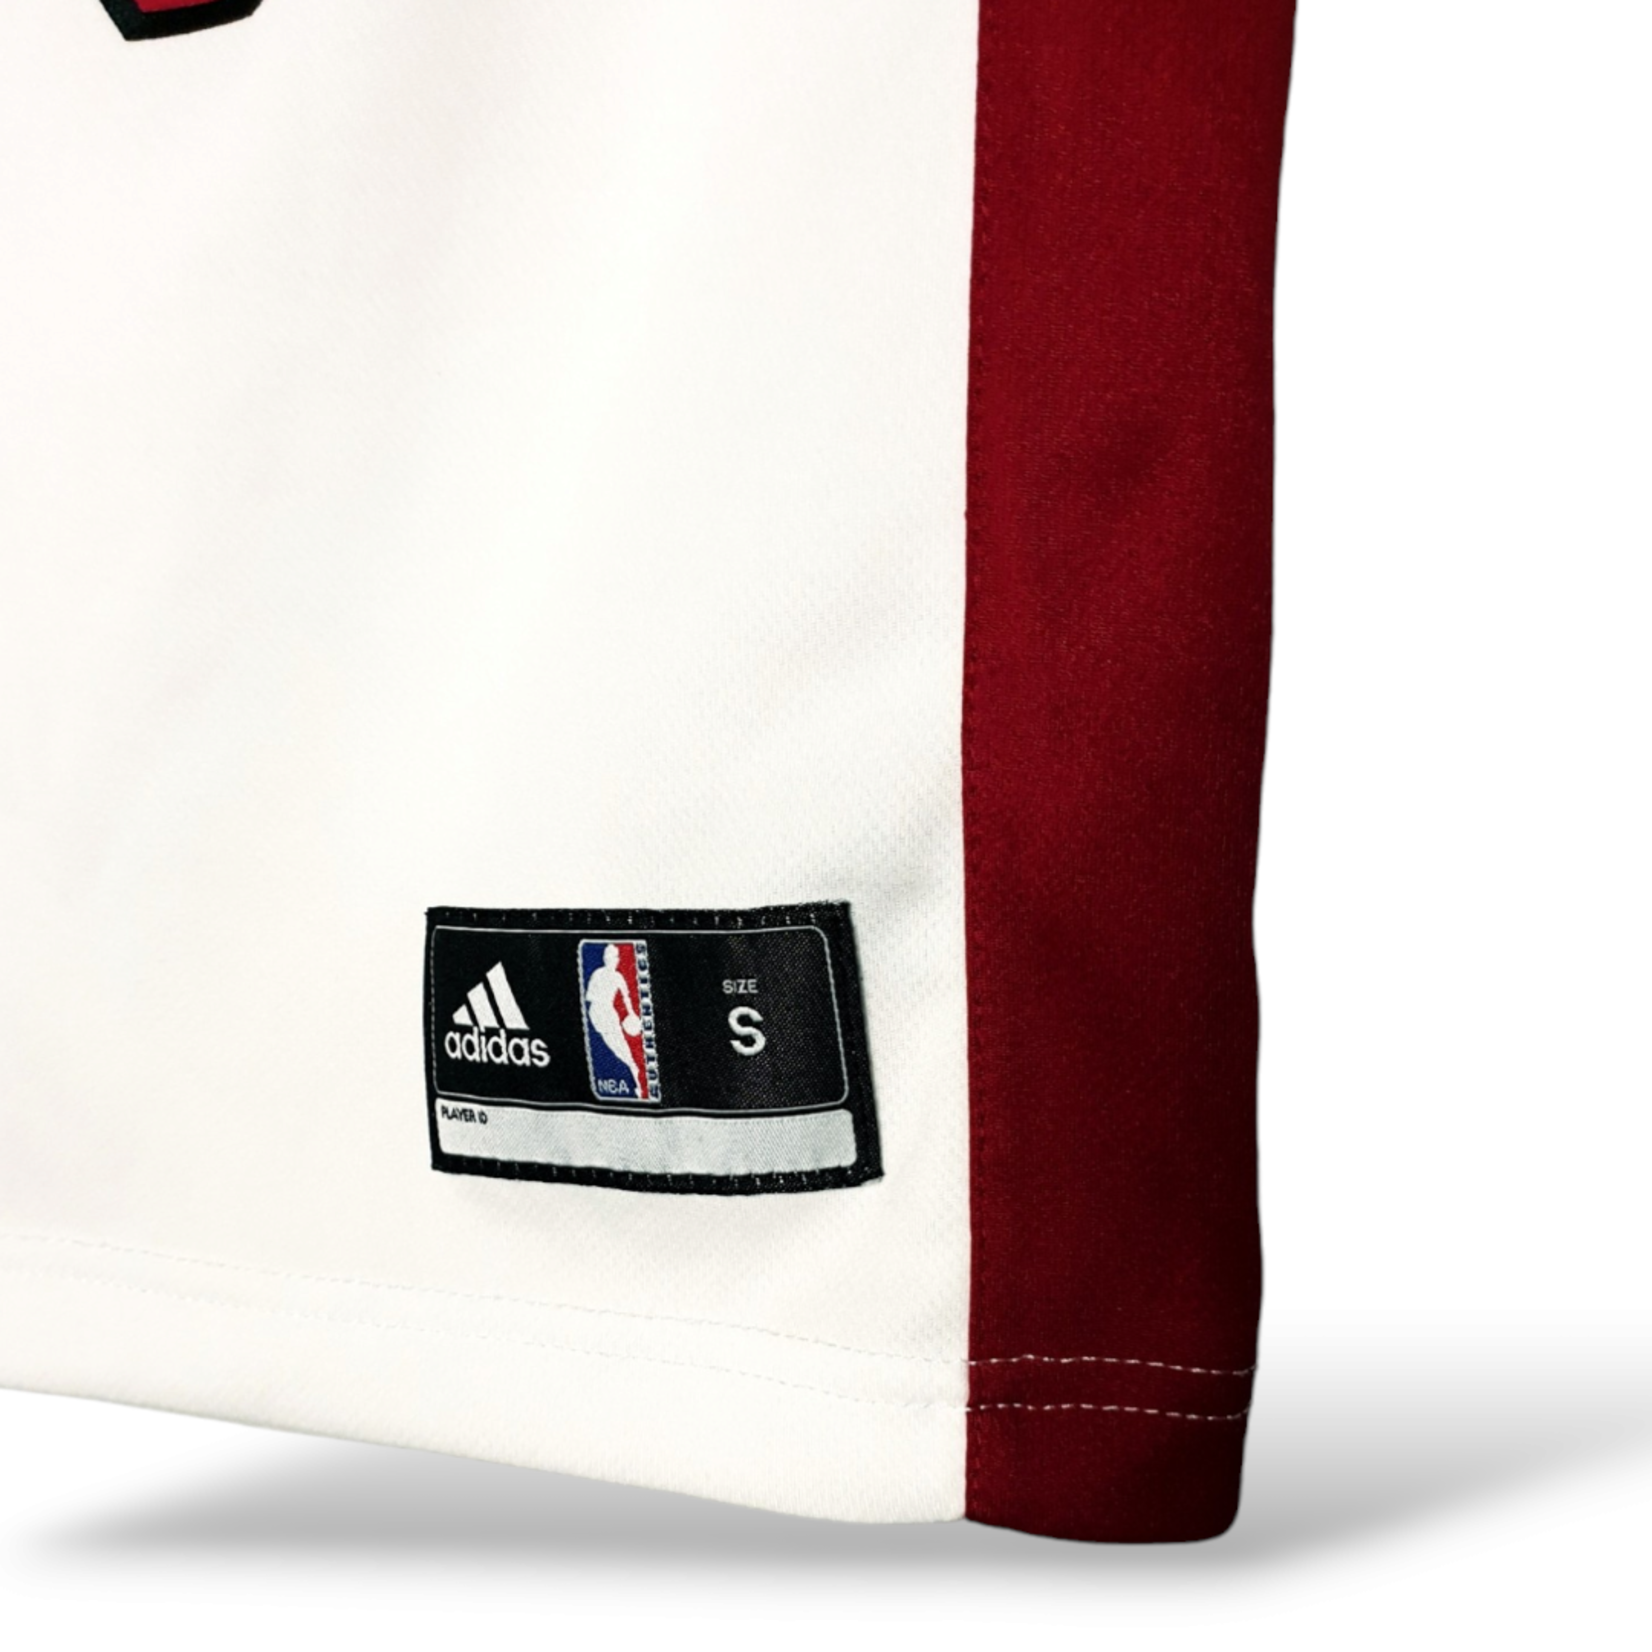 Adidas Original Adidas vintage NBA jersey Miami Heat - Lebron James